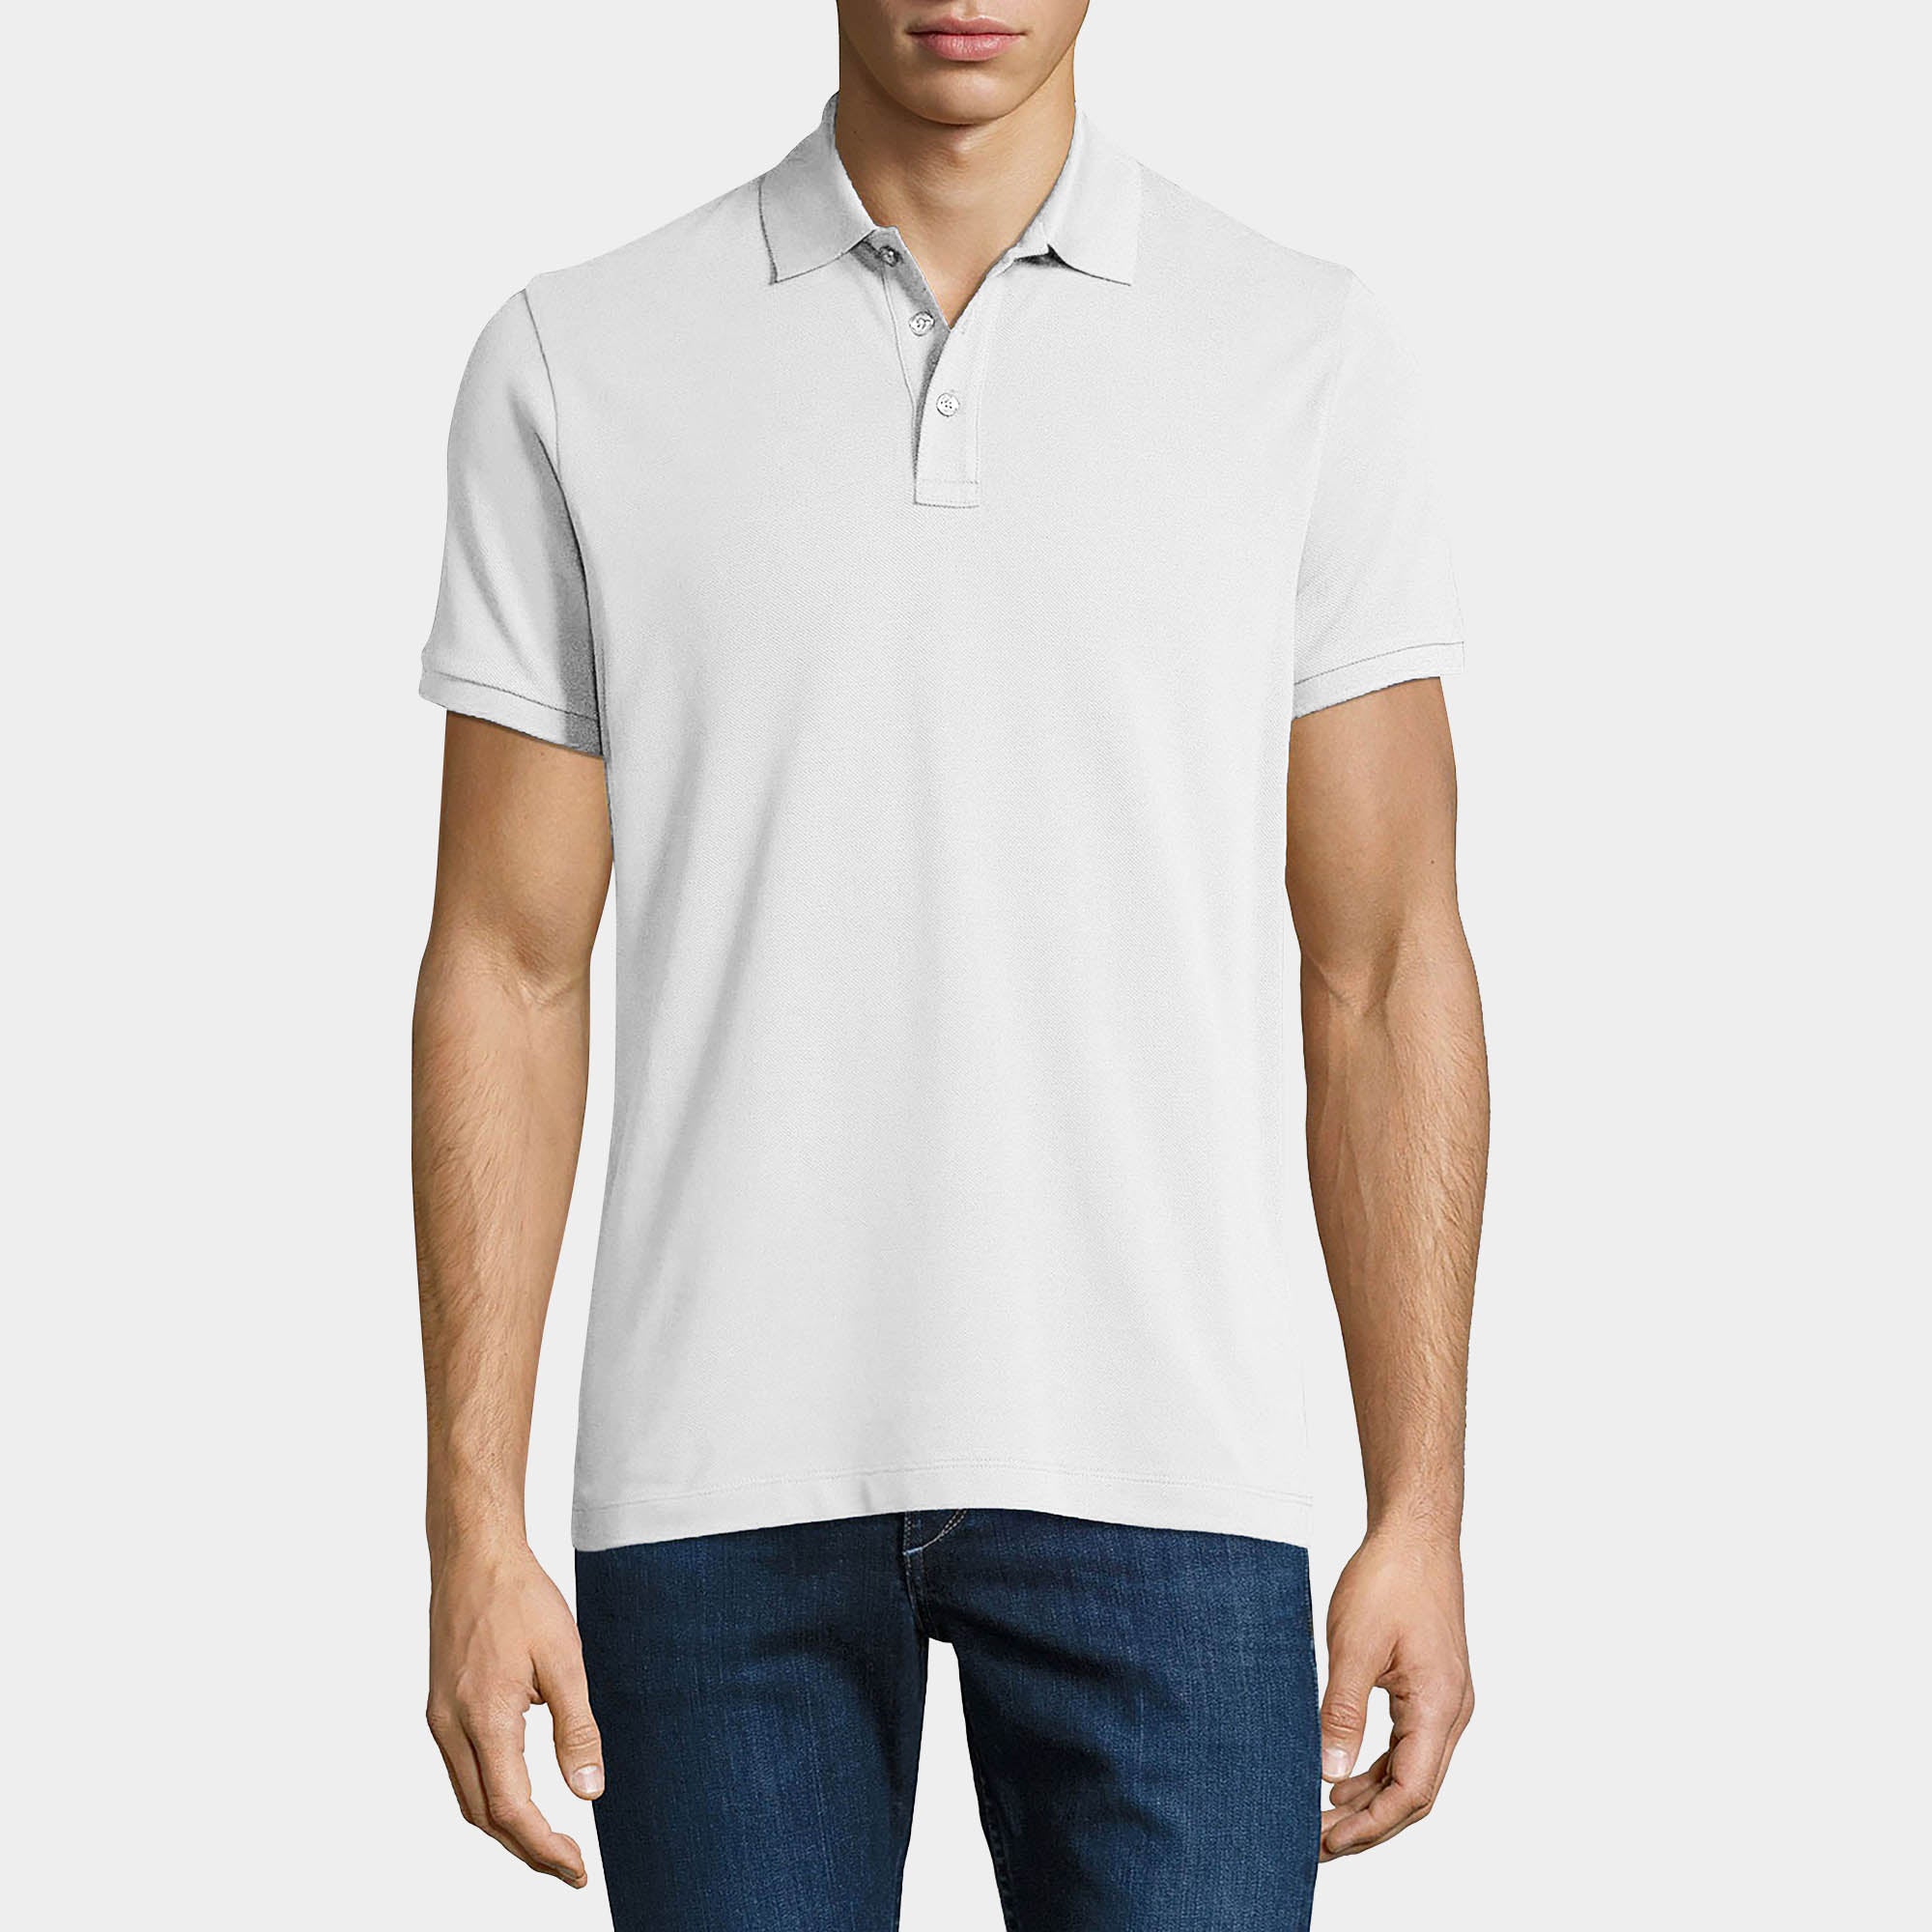 mens polo shirts_sports polos_golf polo_polo t shirts for men_custom polo shirts_cheap polo shirts_polo shirts on sale_designer polo shirts_White